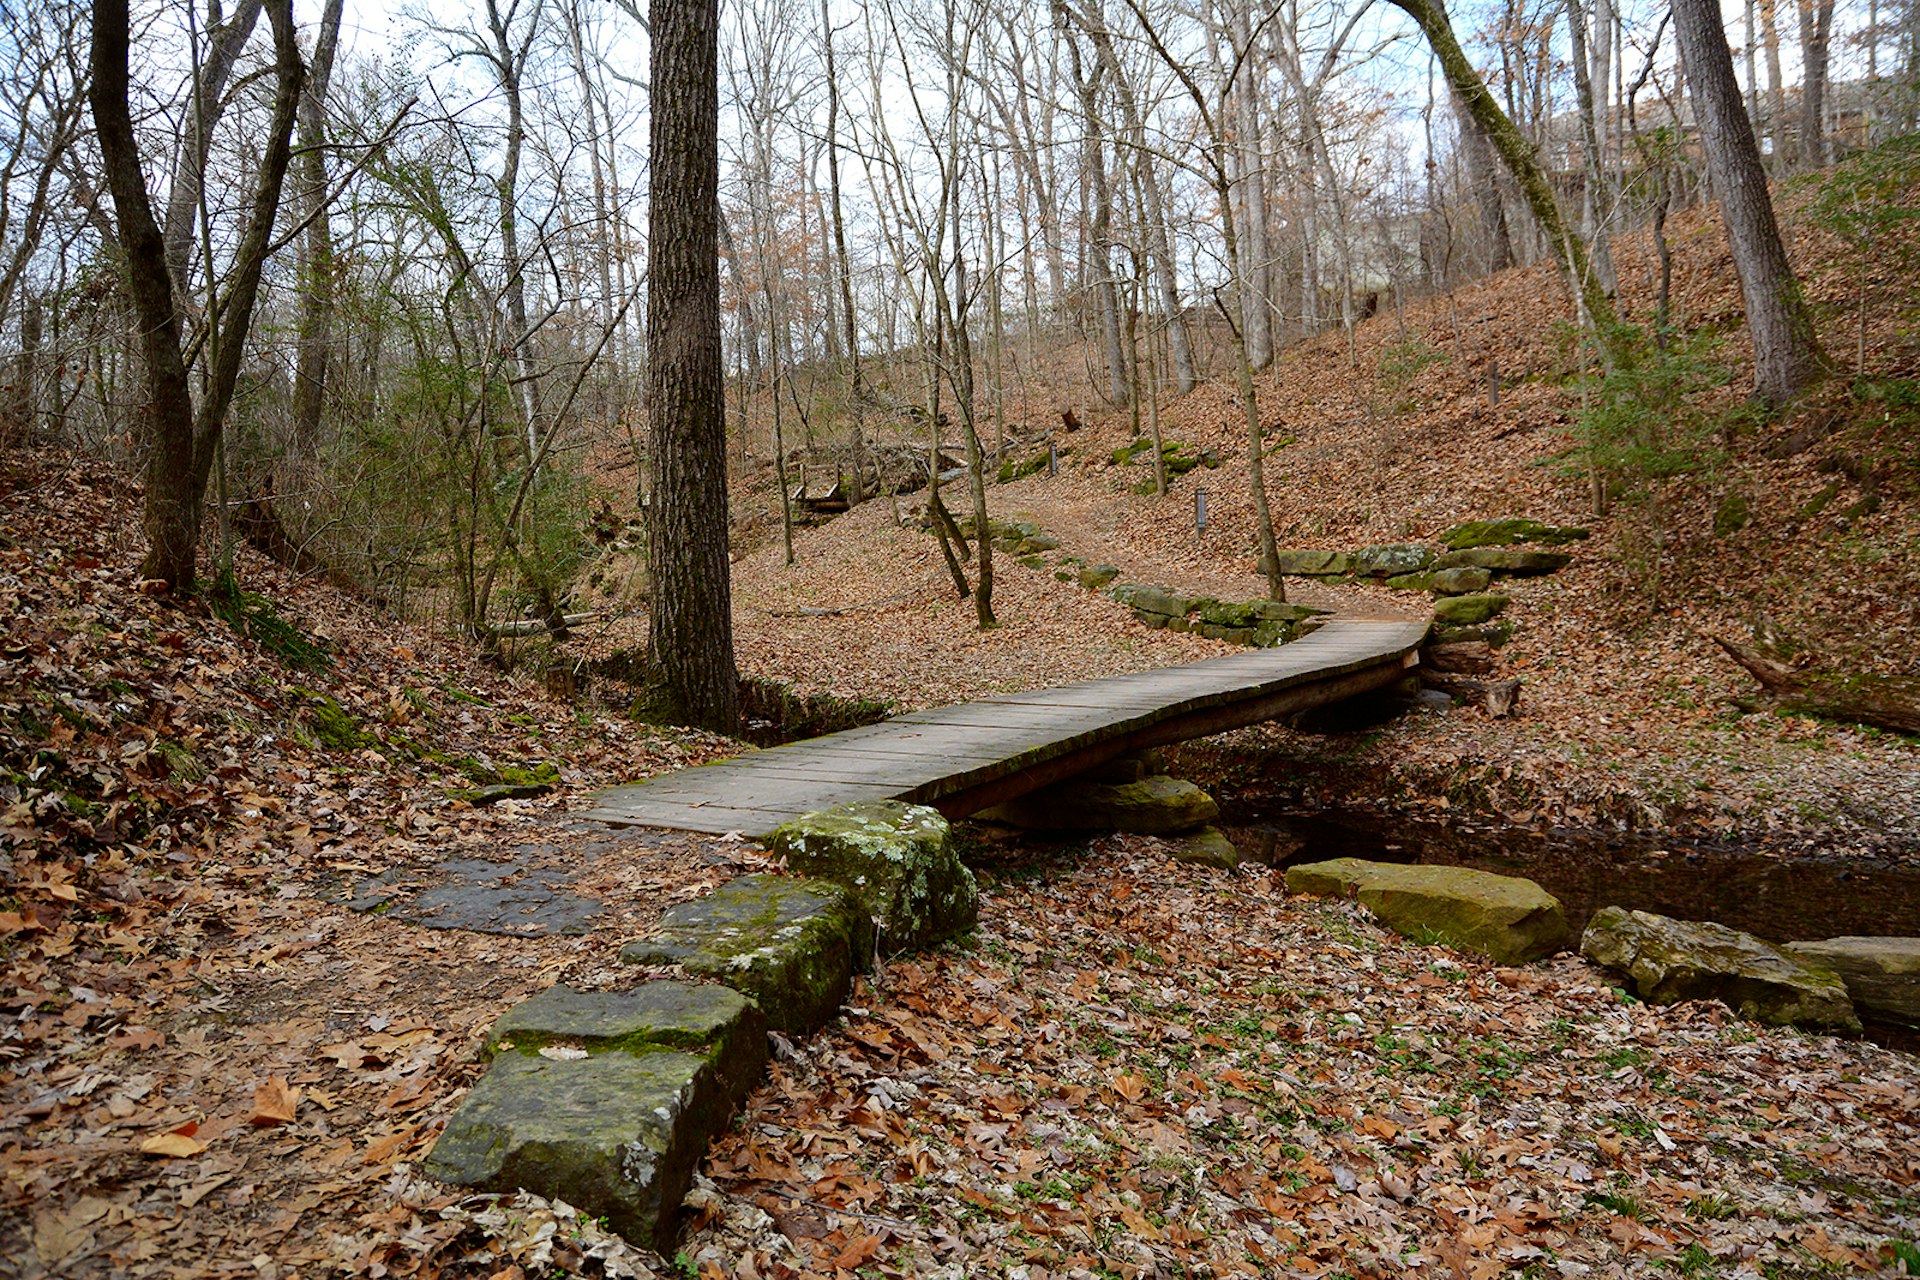 A wooden bridge winds over a creek to create a mountain biking path through a leaf-strewn forest in Arkansas